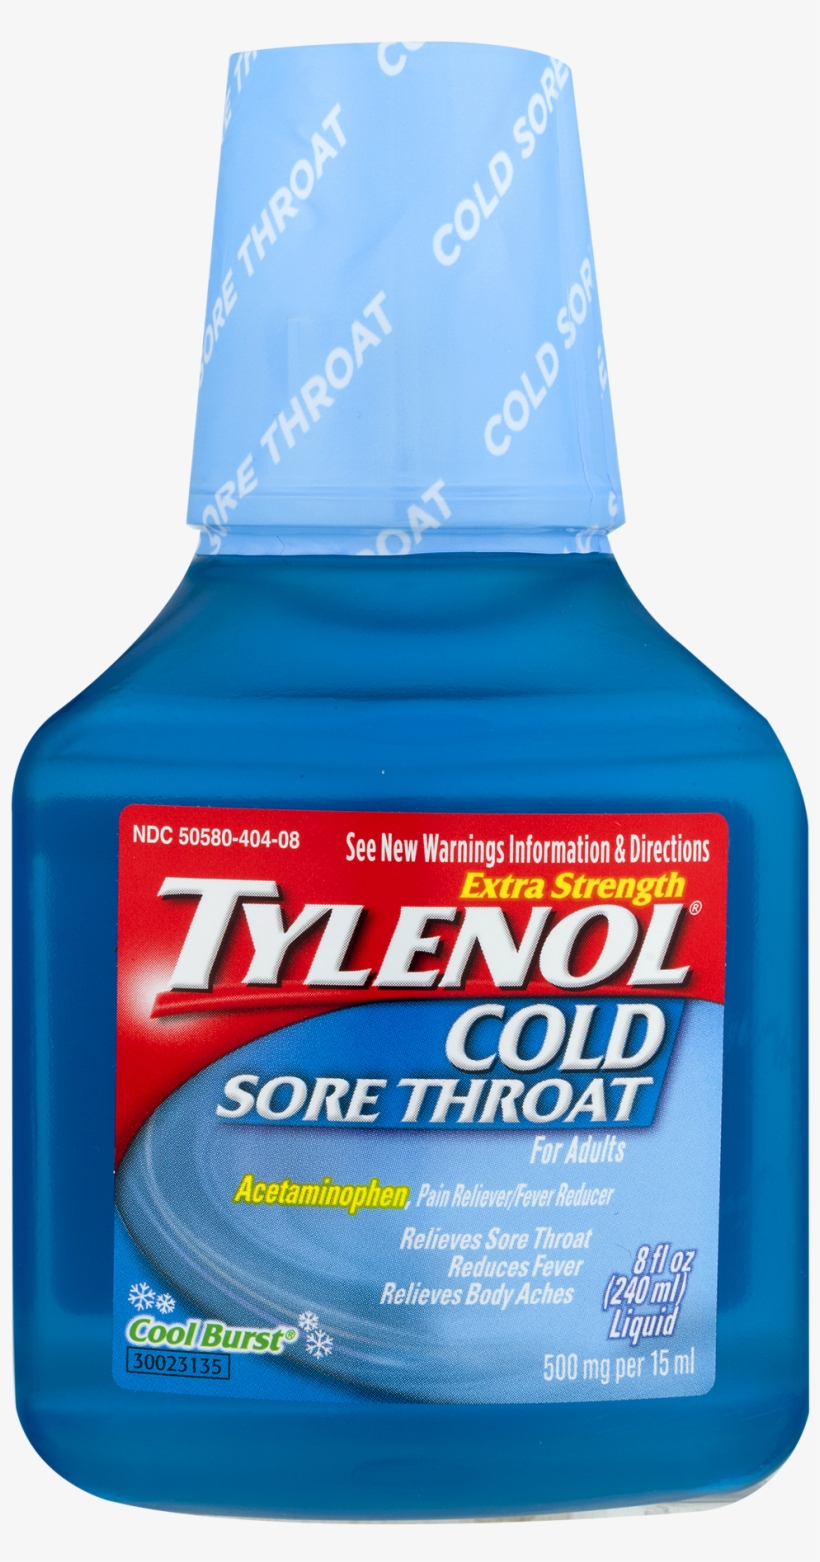 Tylenol Cold Sore Throat Liquid Daytime Cool Burst - Tylenol Sore Throat Daytime, transparent png #2733829